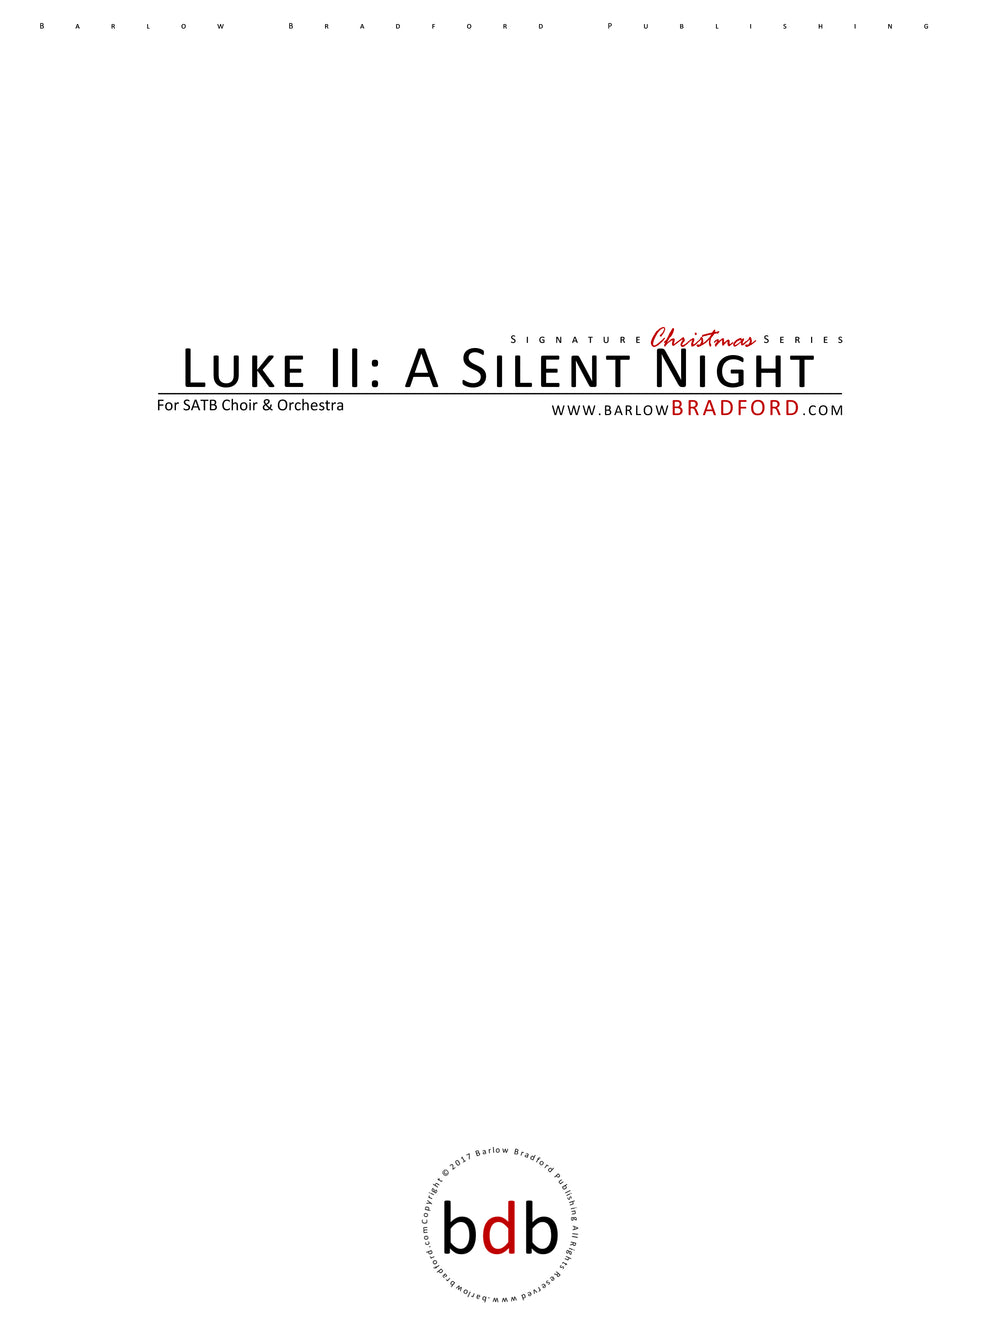 Luke II: A Silent Night